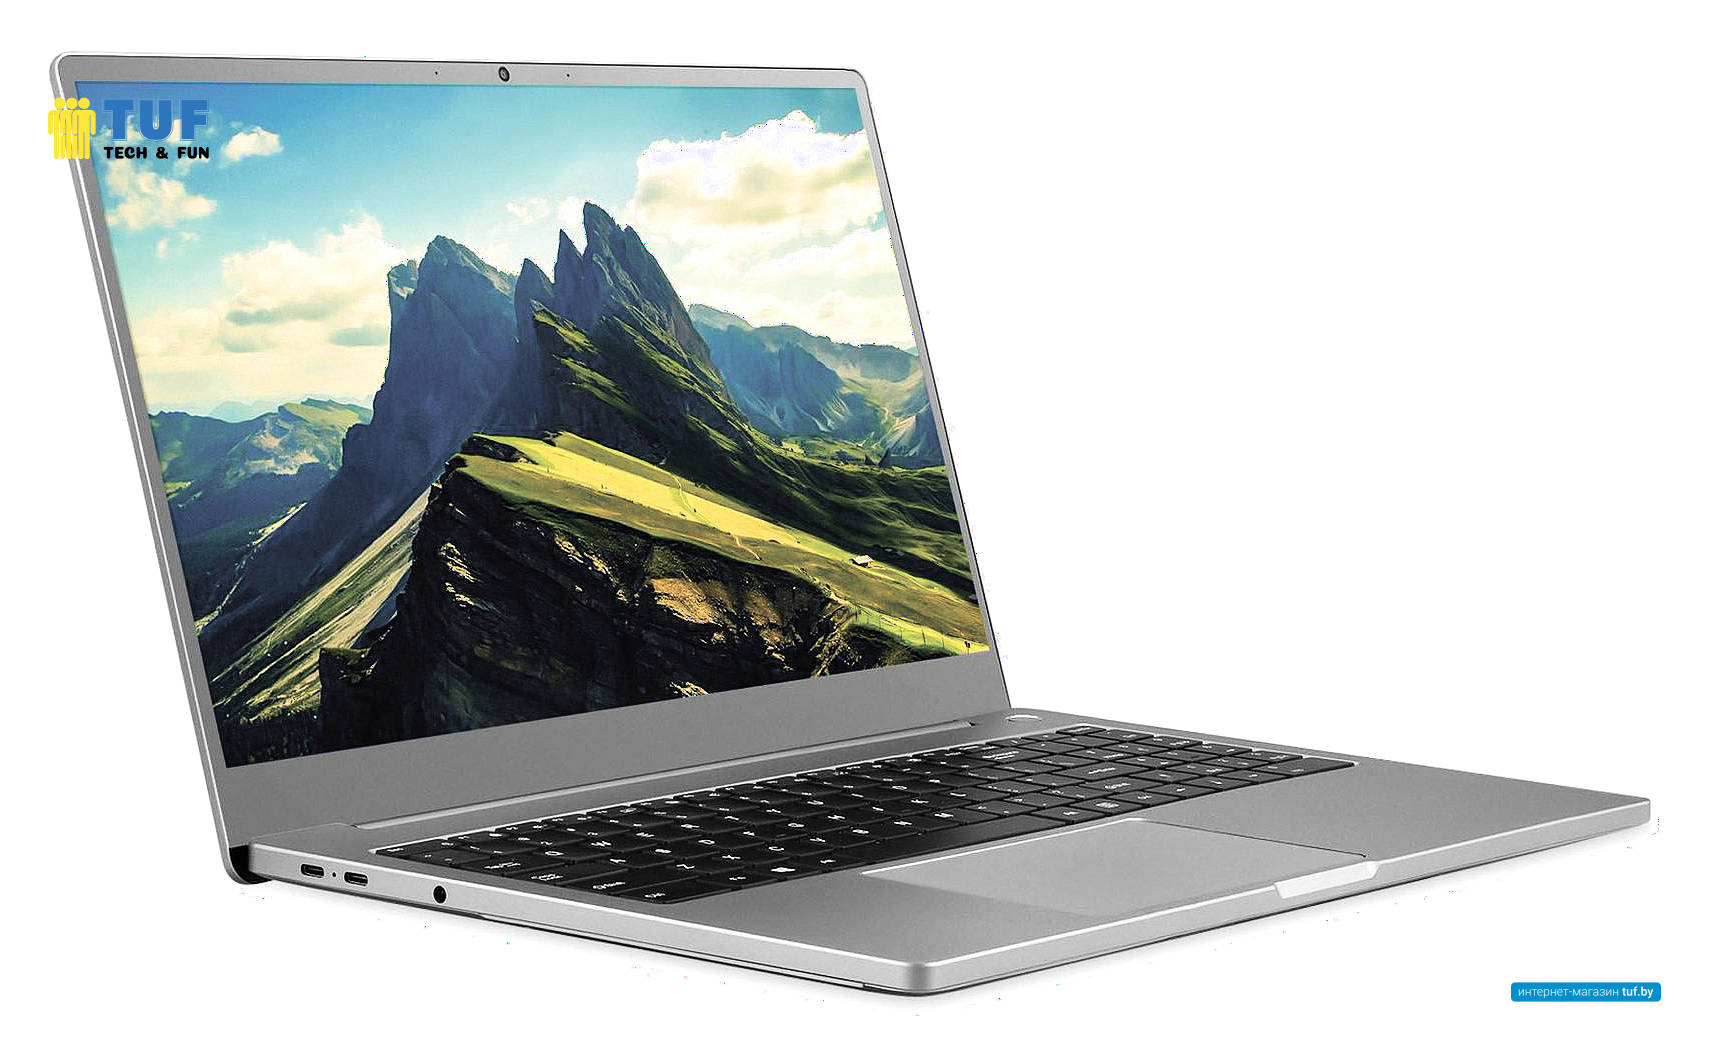 Ноутбук Rombica myBook Zenith PCLT-0022